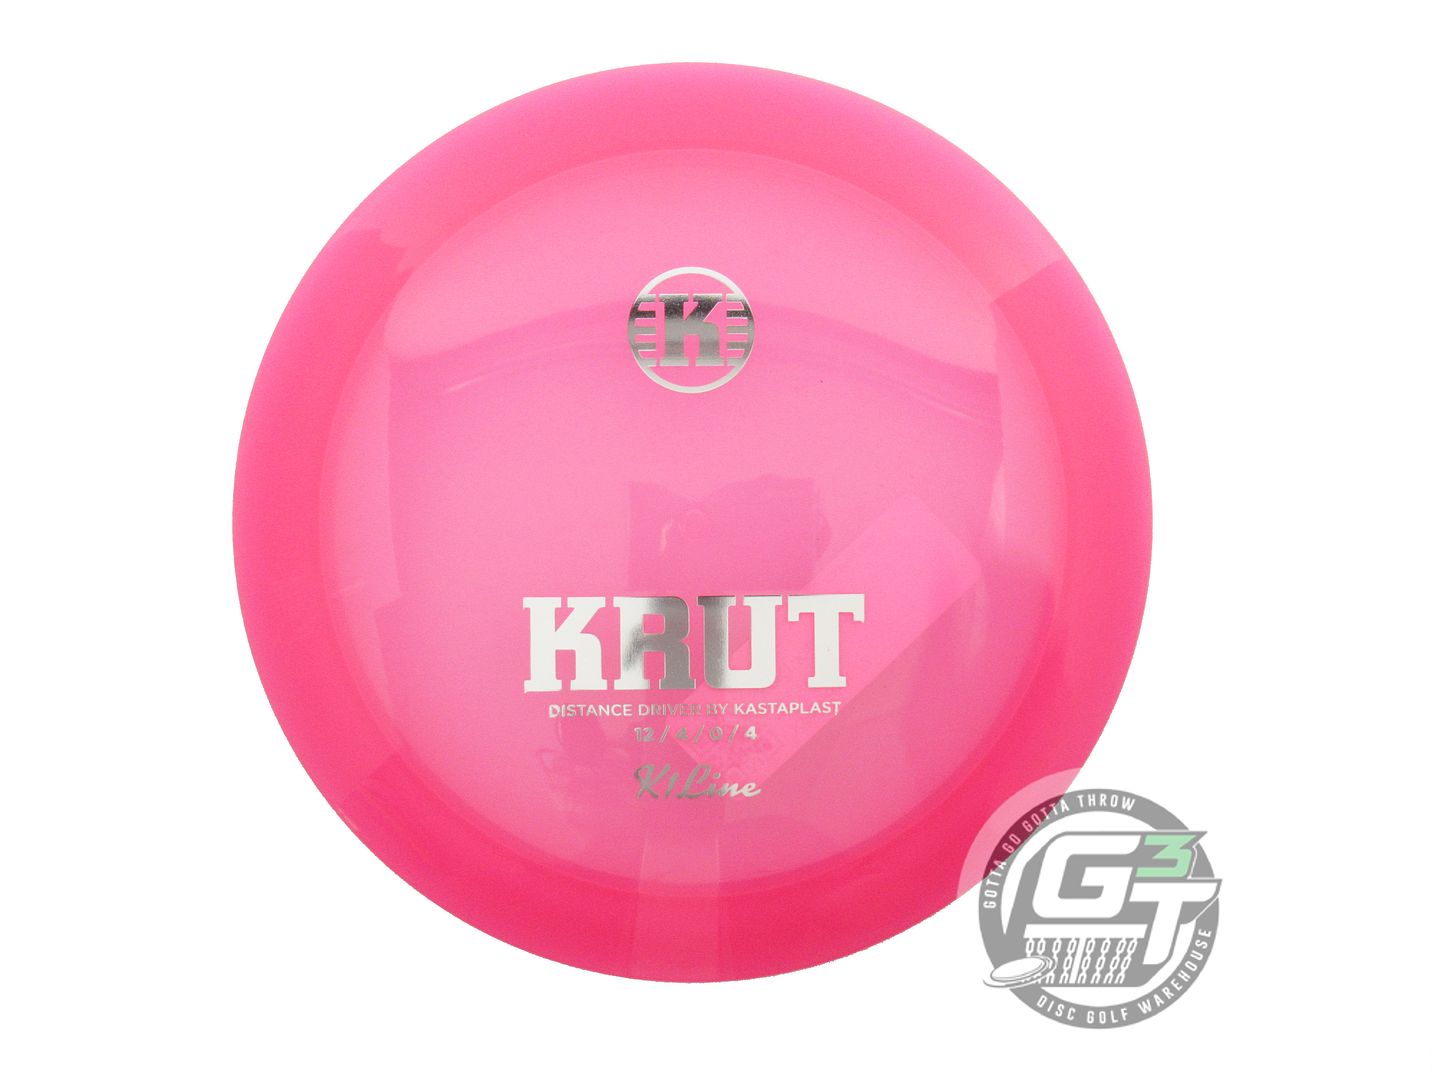 Kastaplast K1 Krut Distance Driver Golf Disc (Individually Listed)